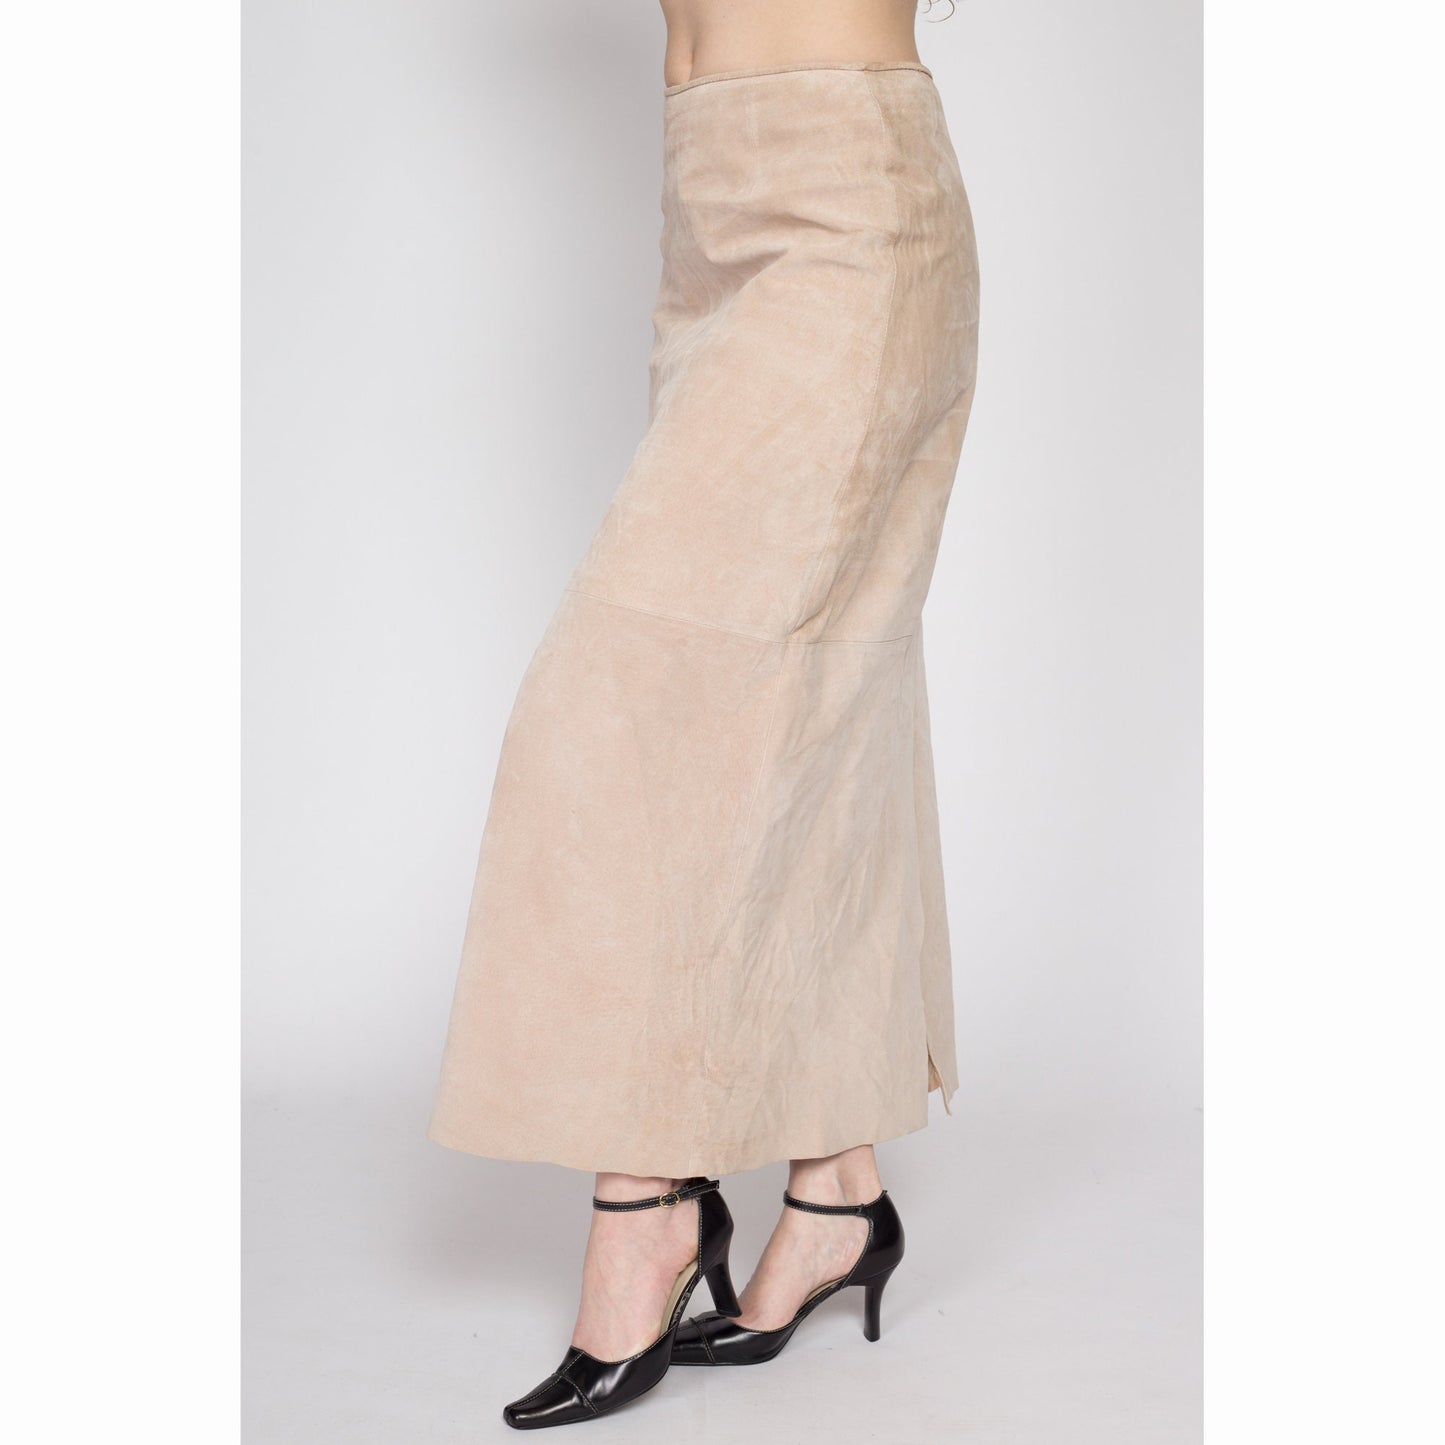 Medium 90s Tan Suede Maxi Skirt 29" | Vintage Boho Leather High Waisted Minimalist Western Skirt